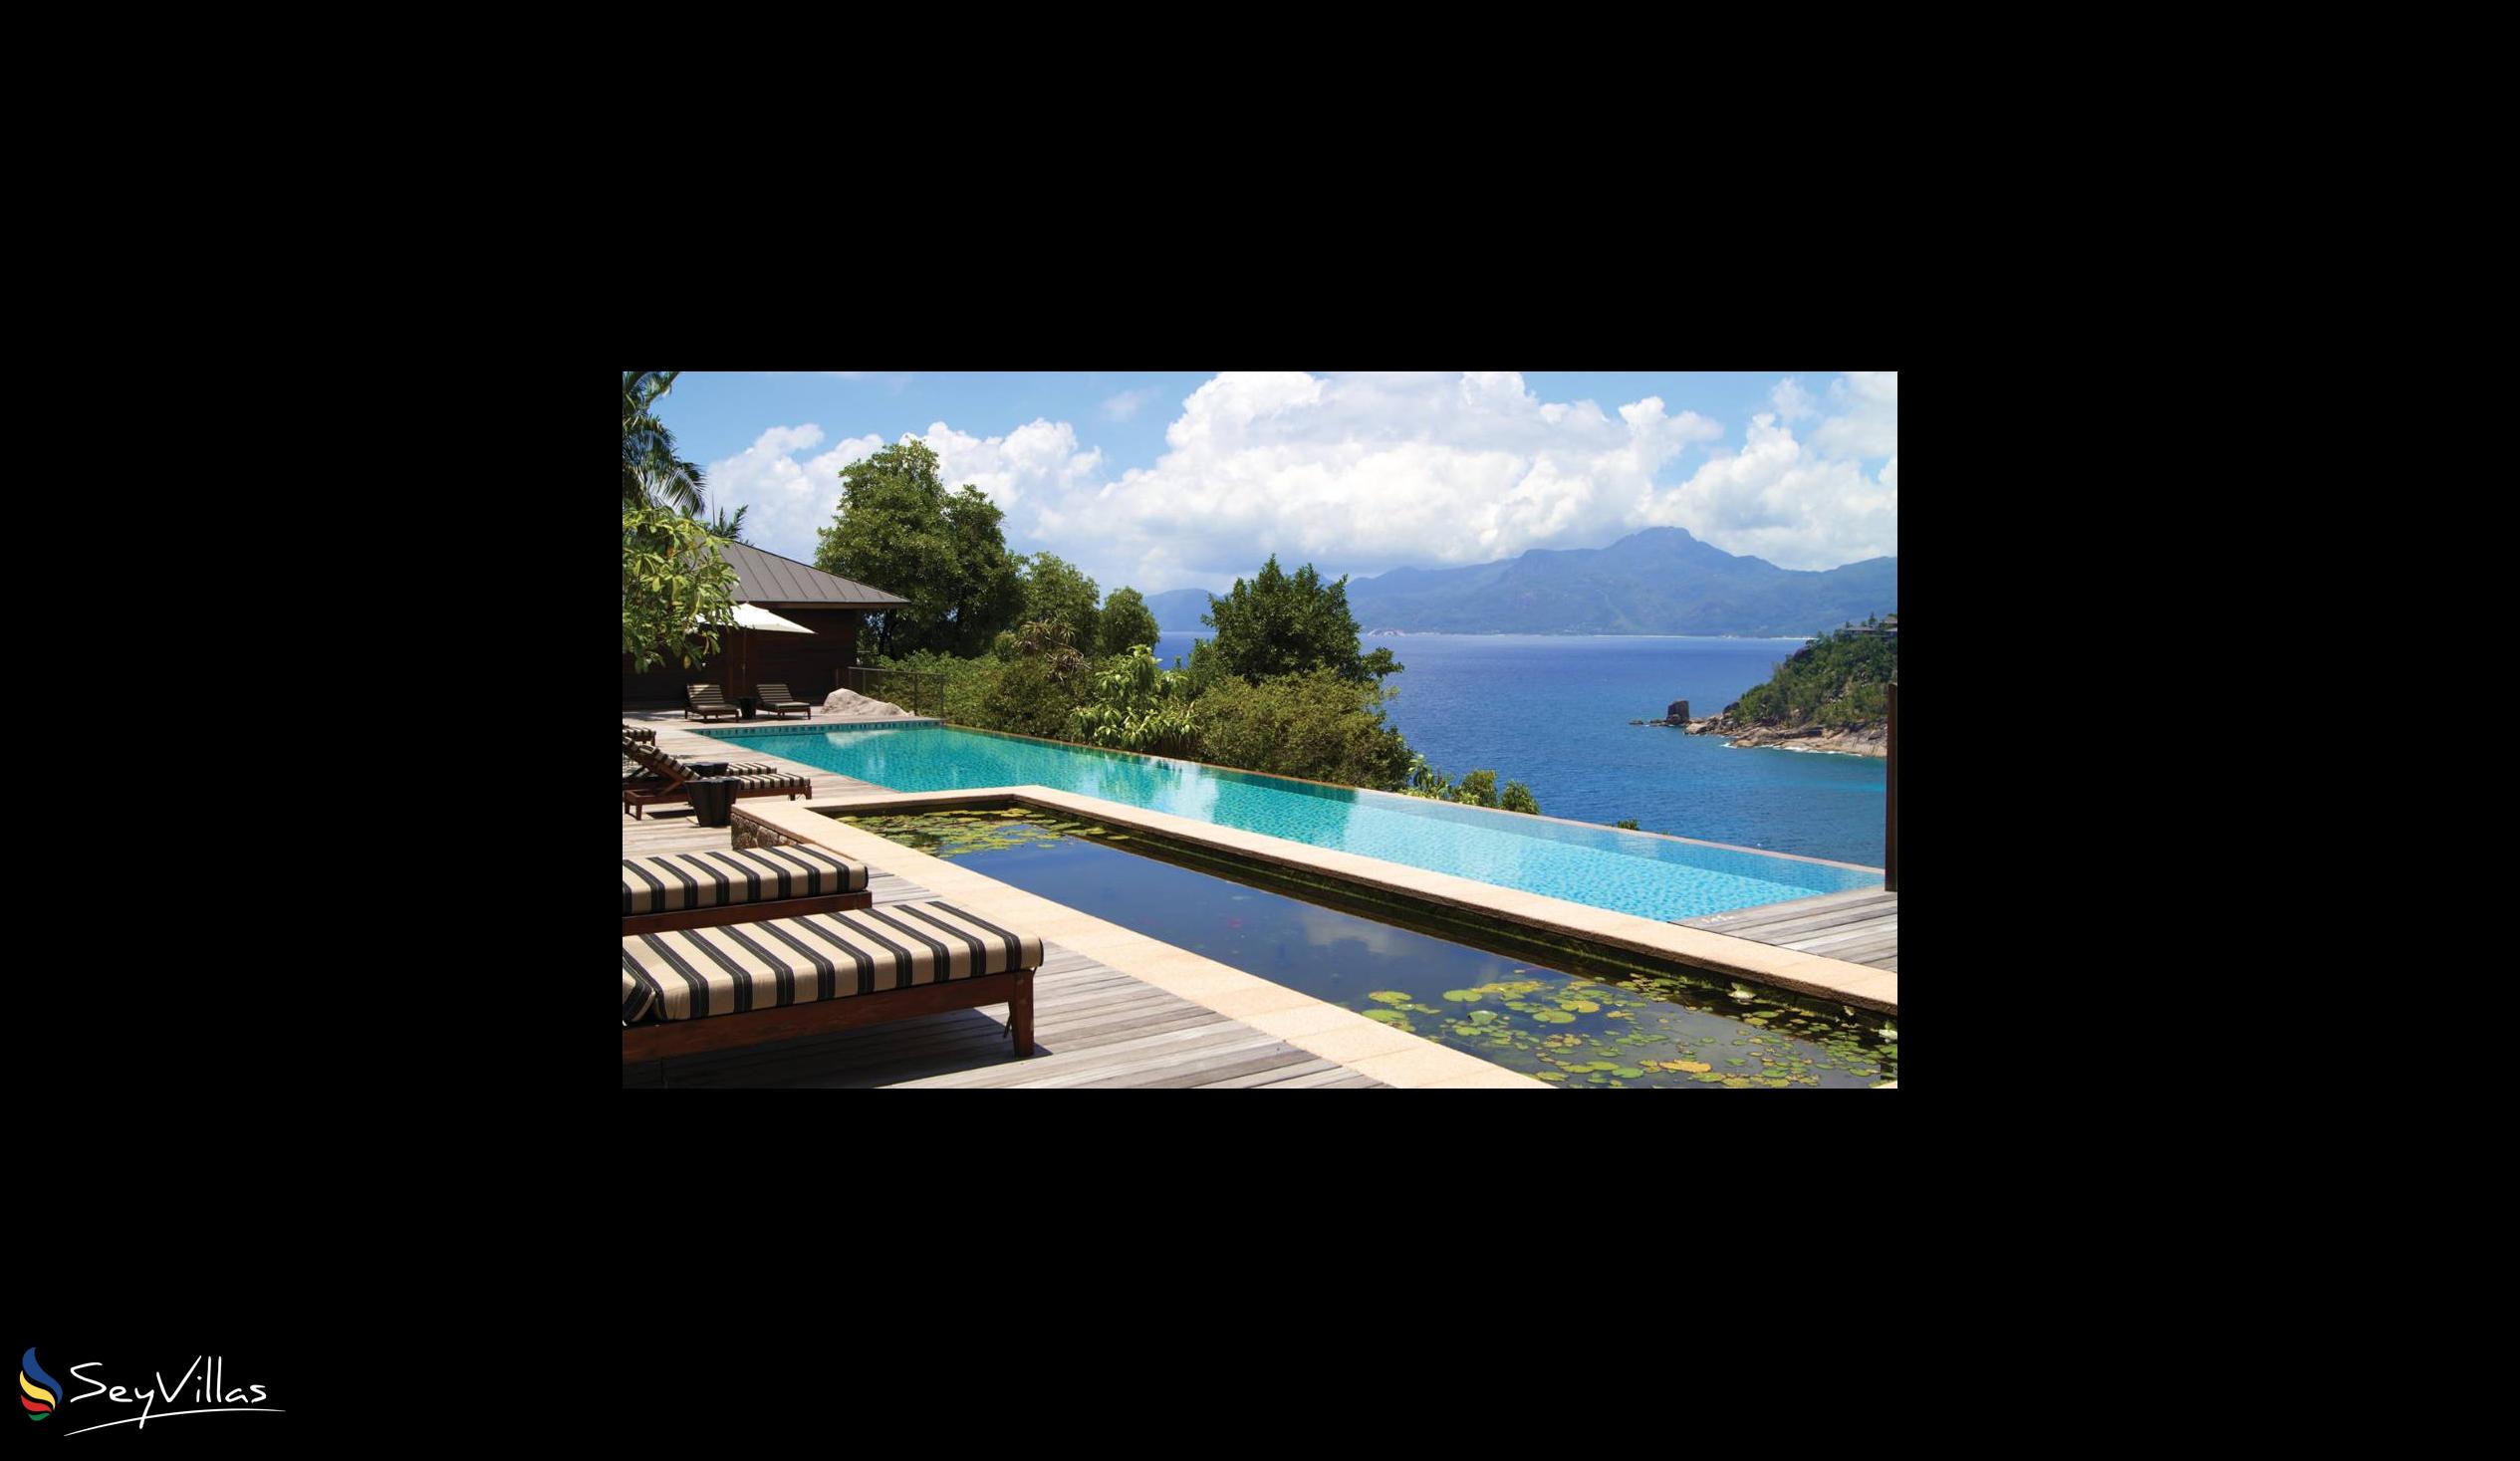 Photo 69: Four Seasons Resort - 4-Bedroom Residence Villa - Mahé (Seychelles)